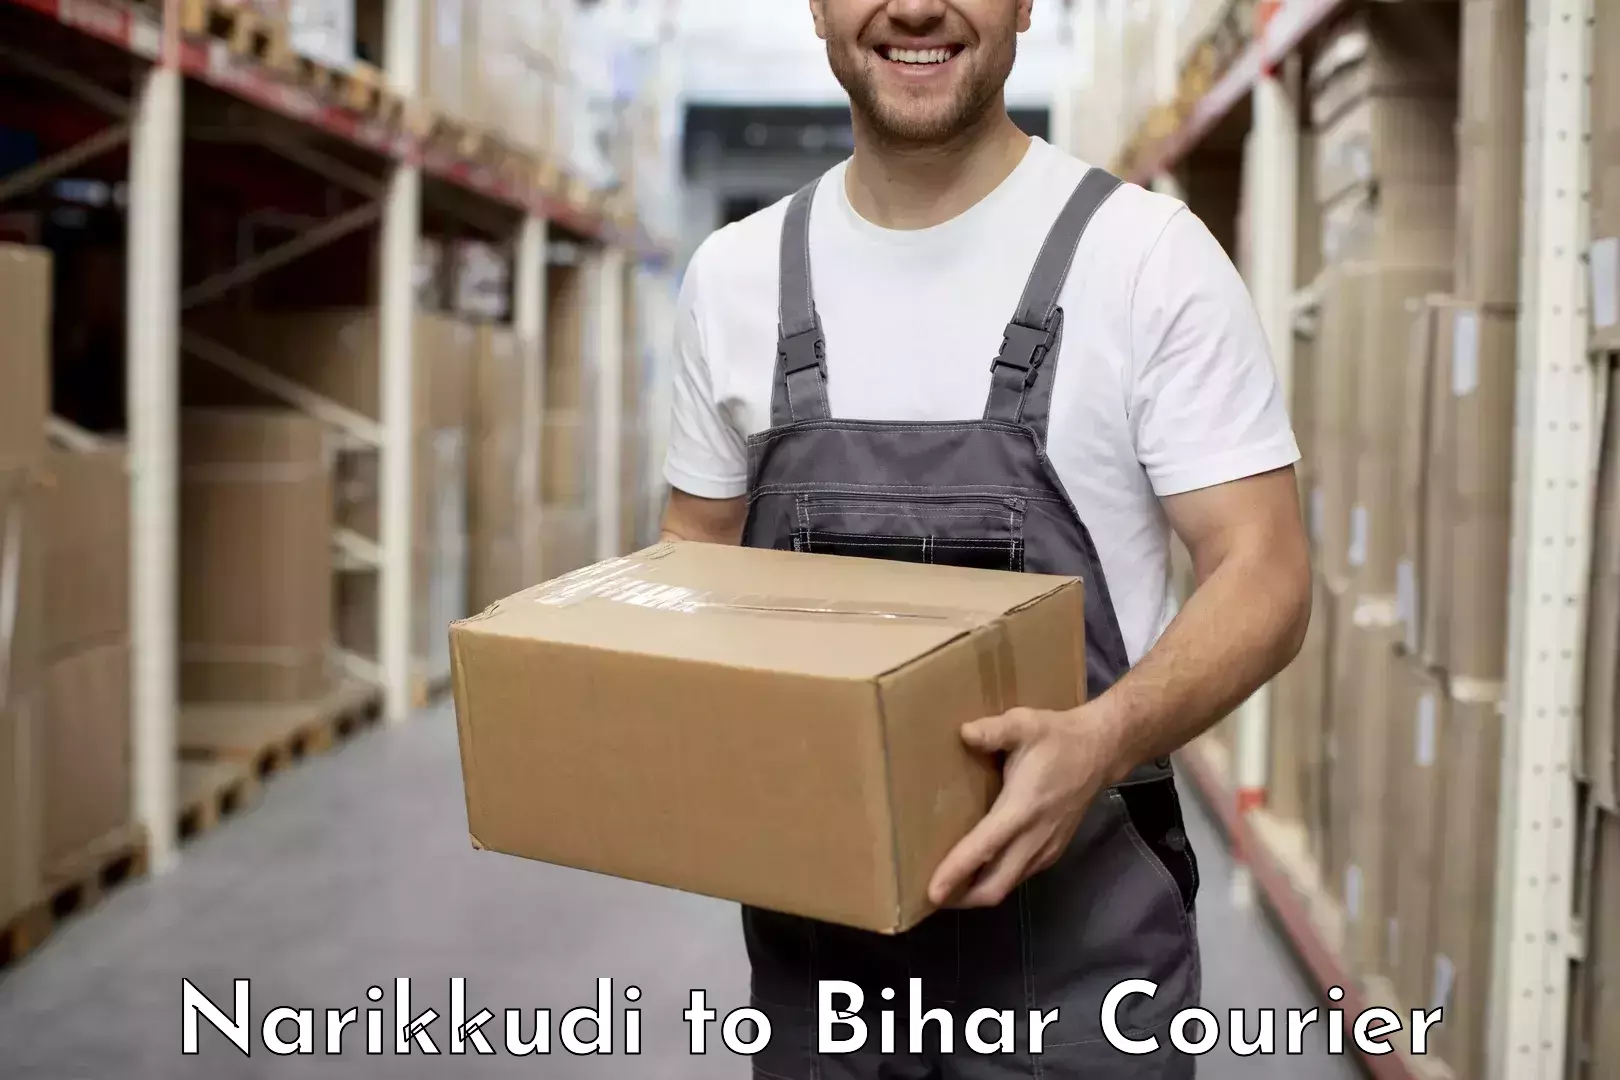 Efficient package consolidation Narikkudi to Aurai